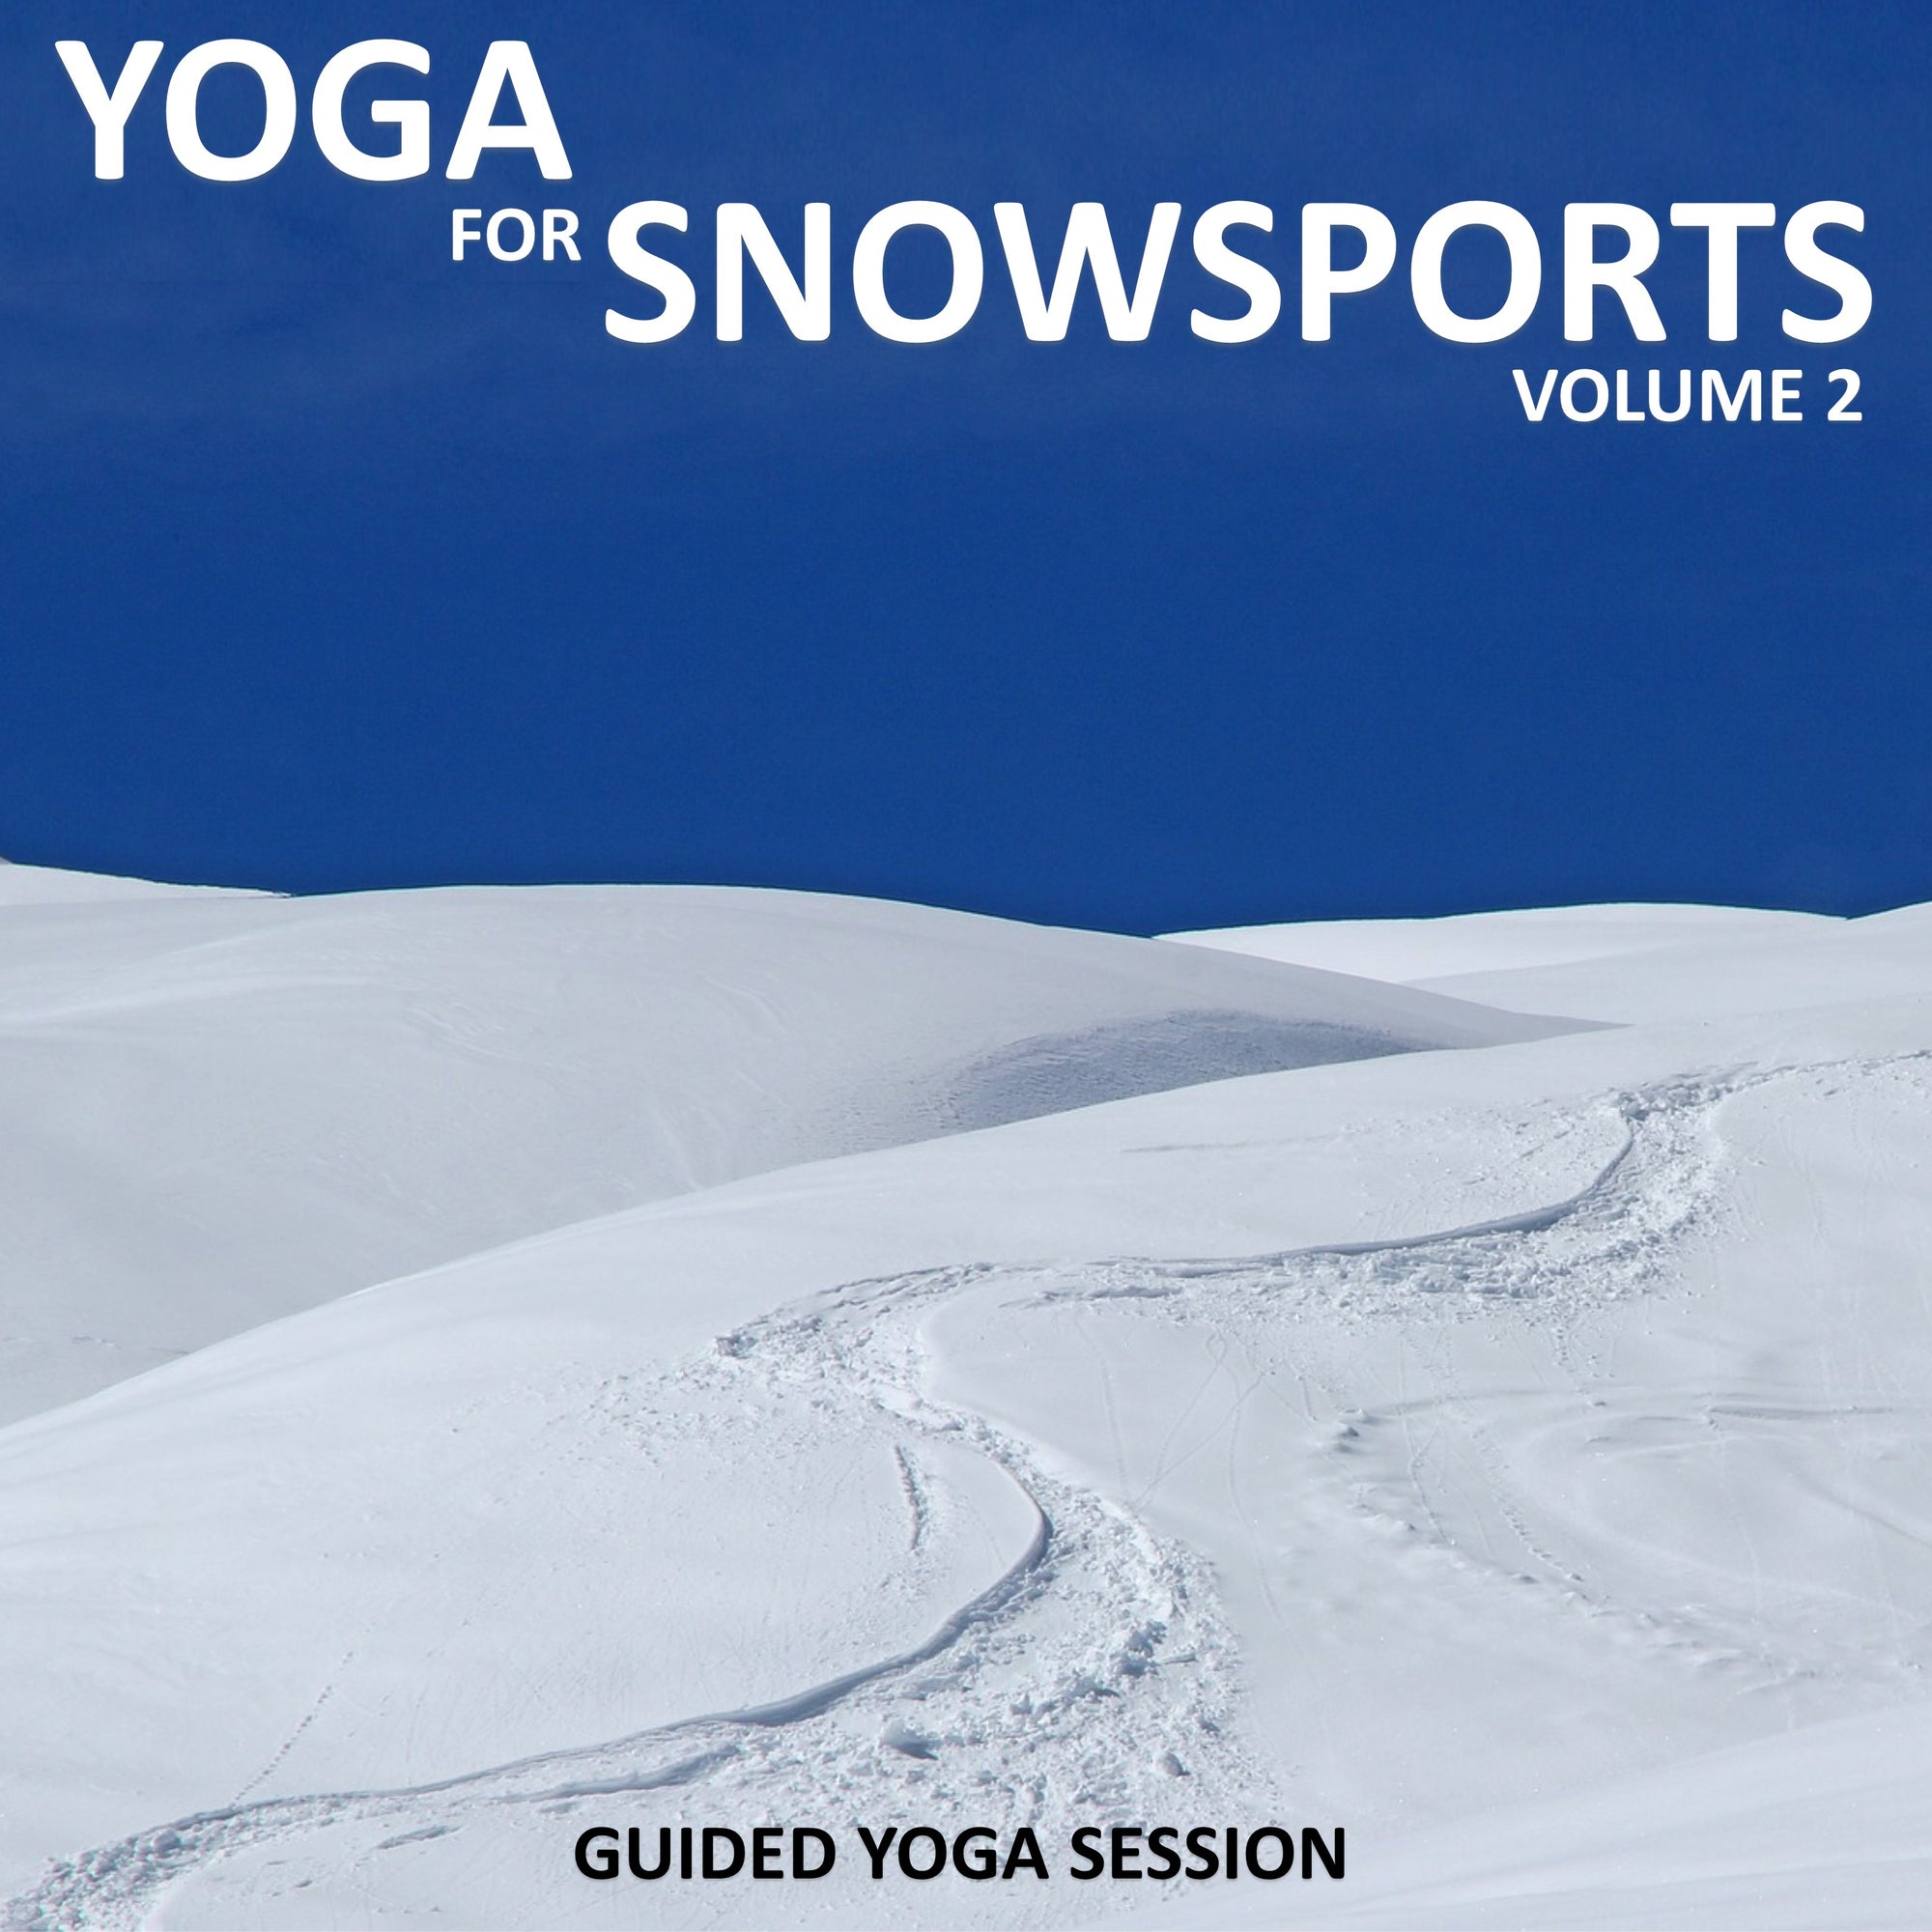 Yoga for Snow Sports Volume 2